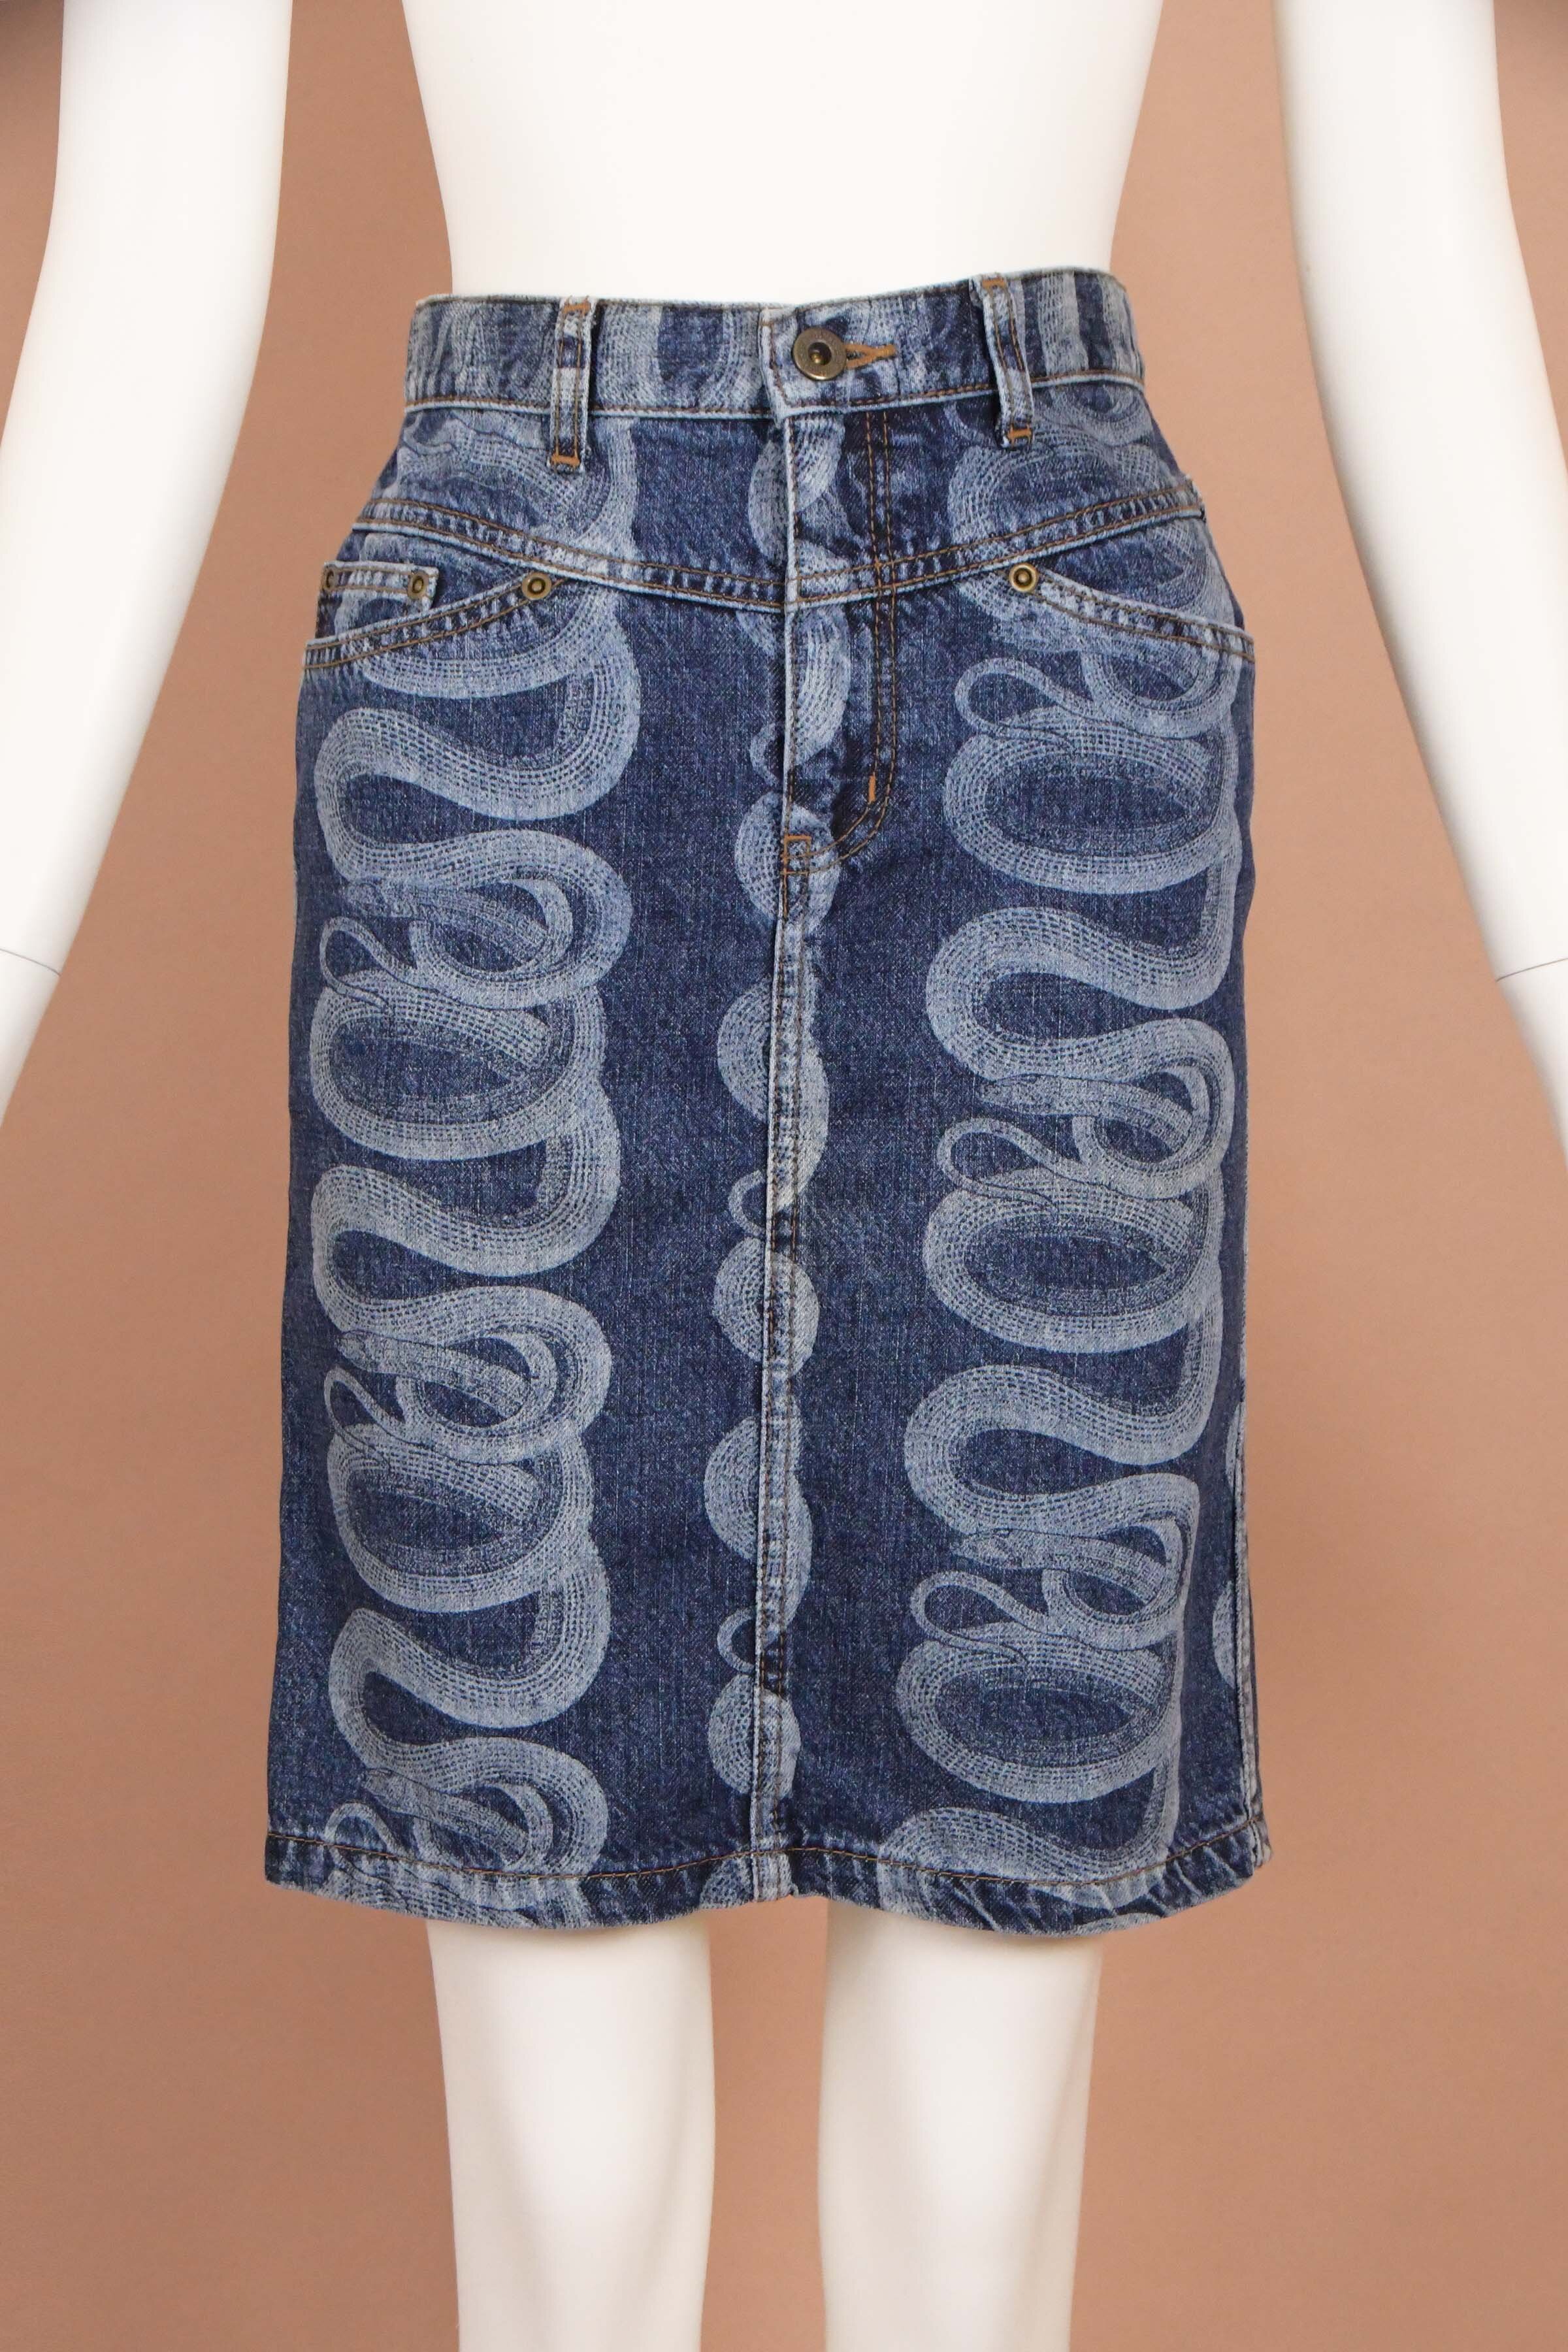 Hysteric Glamour Iconic s Snake Print Denim Skirt XS/S